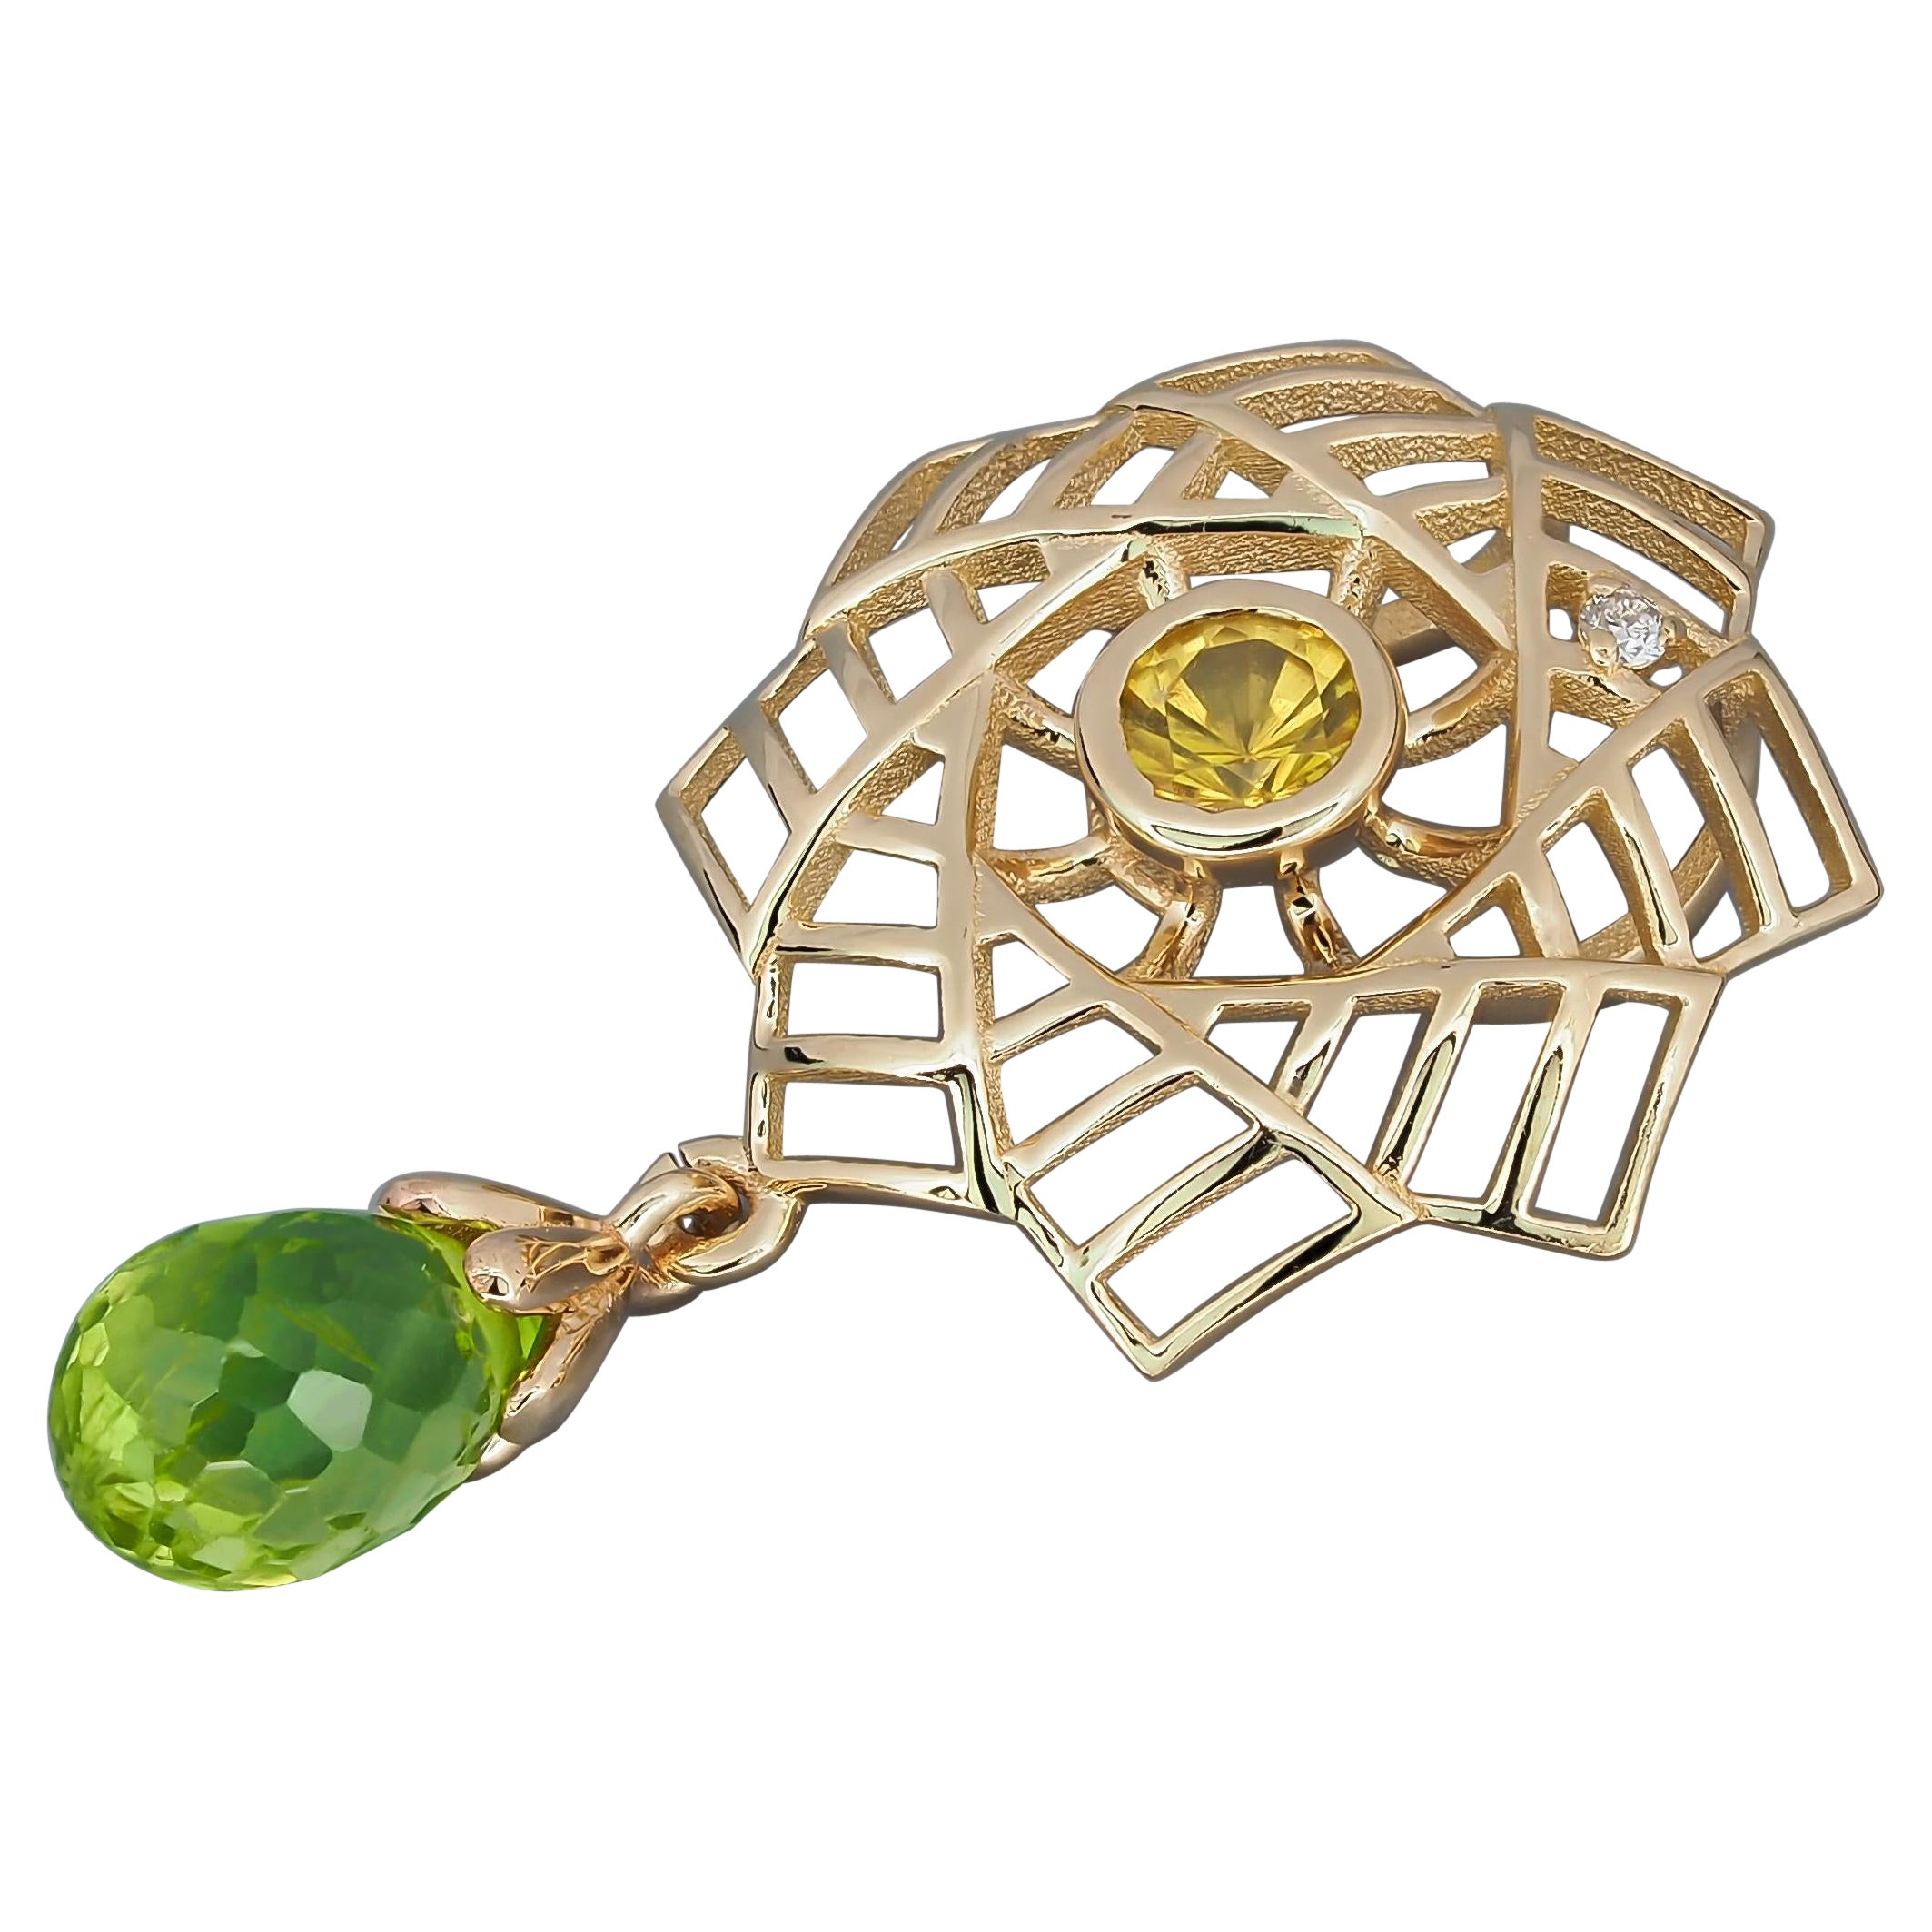 Briolette peridot pendant in 14k gold.  For Sale